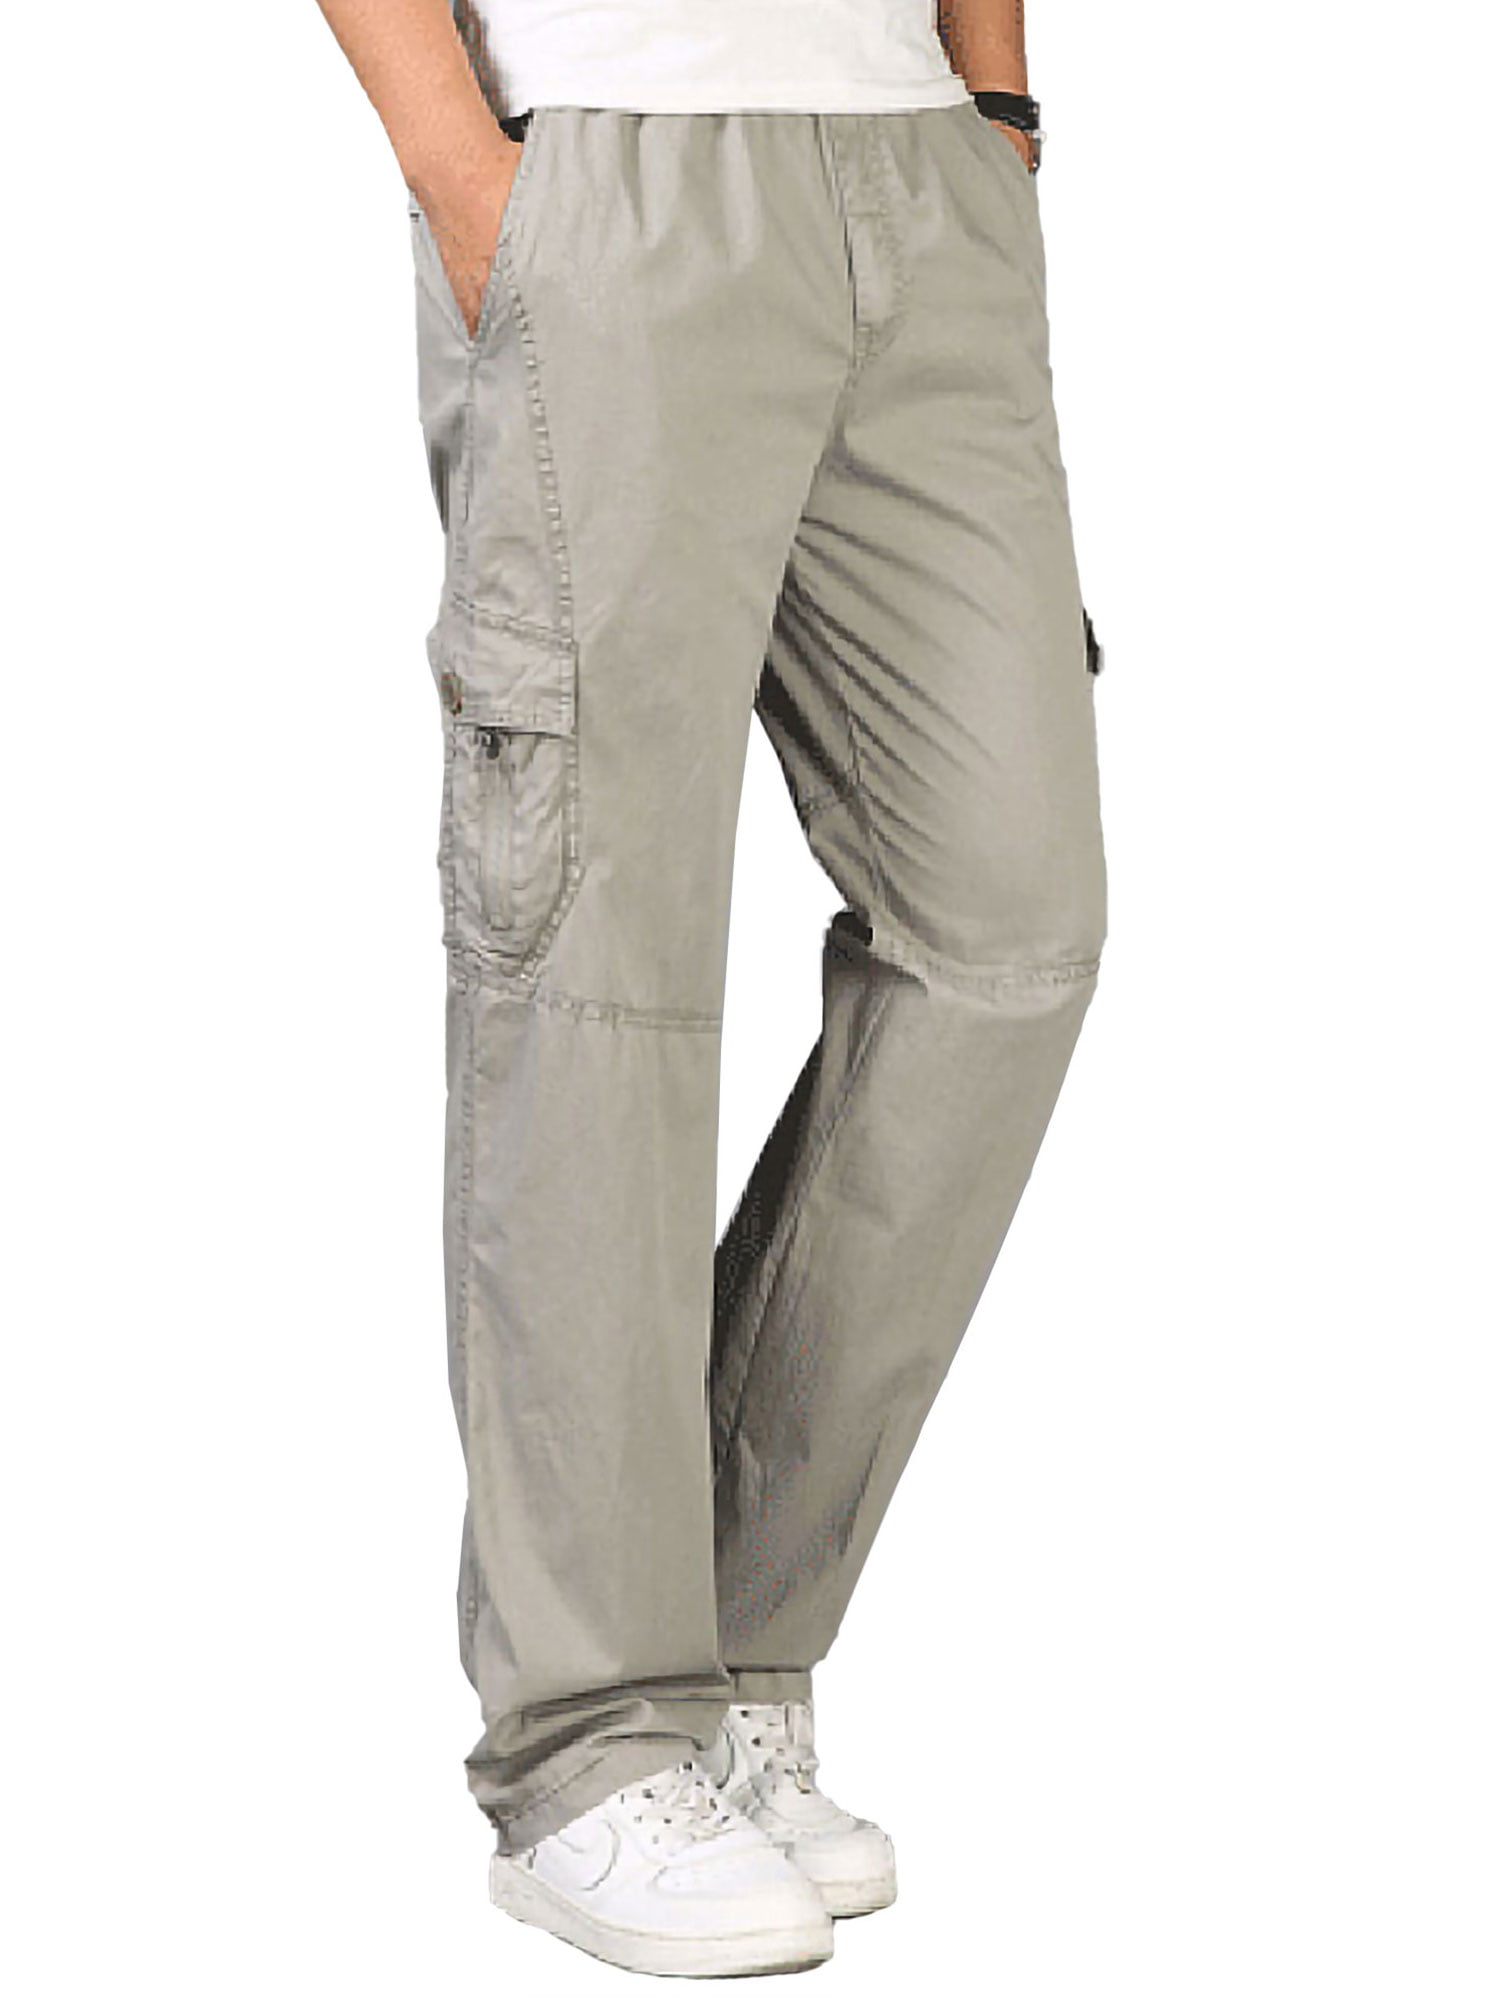 men's athletic cargo pants